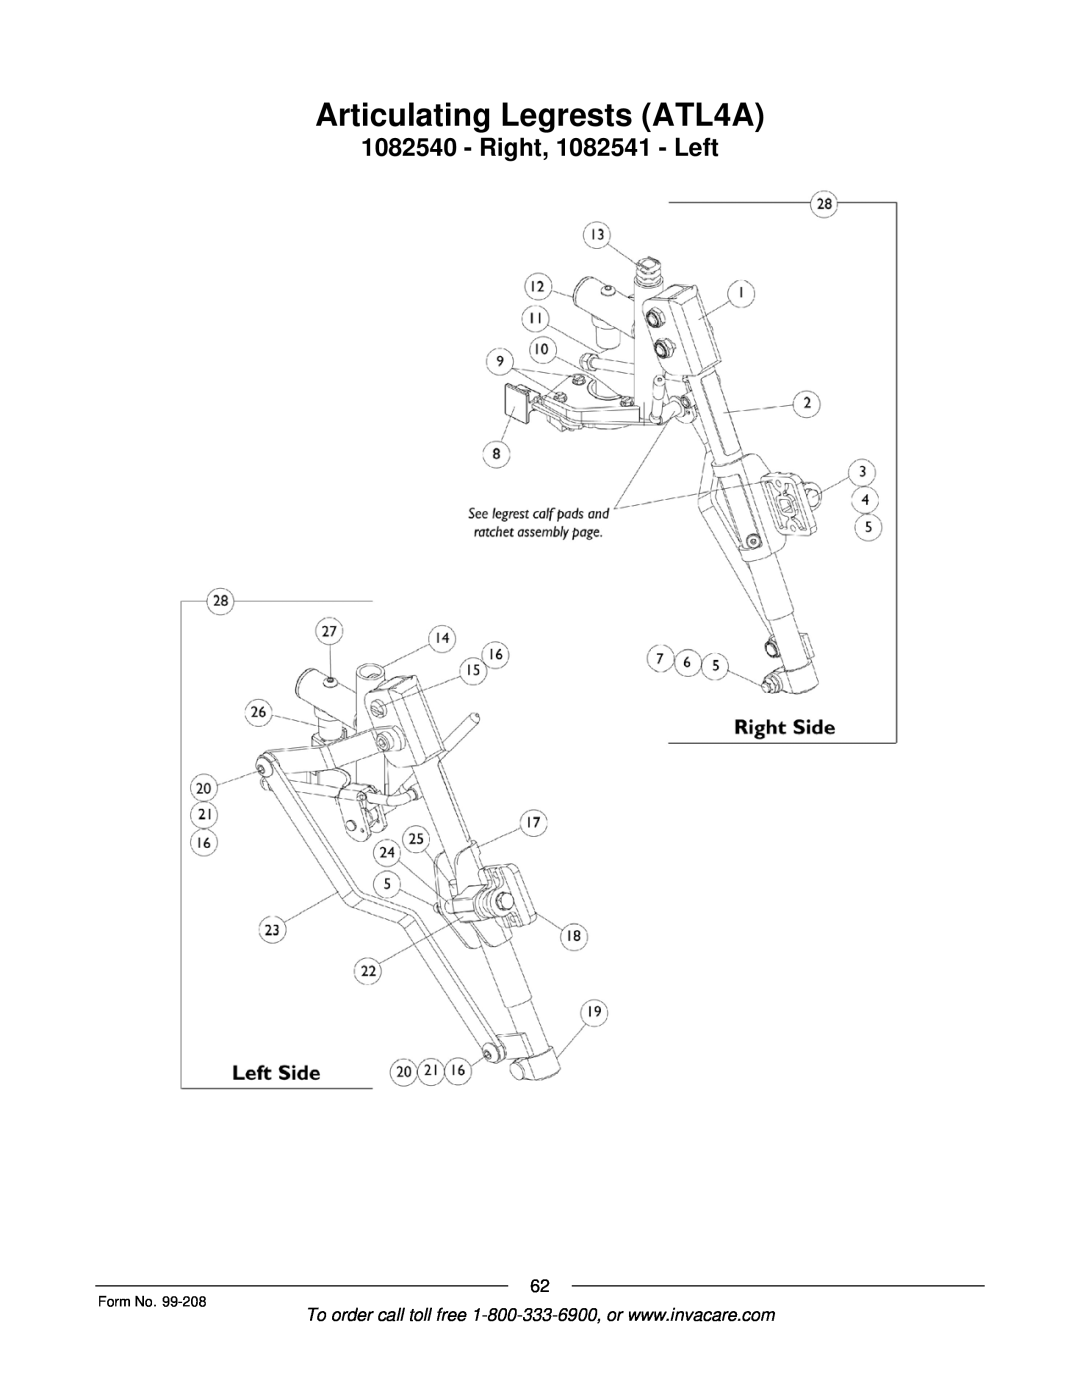 Invacare Allegro manual Articulating Legrests ATL4A, Right, 1082541 - Left, Form No 